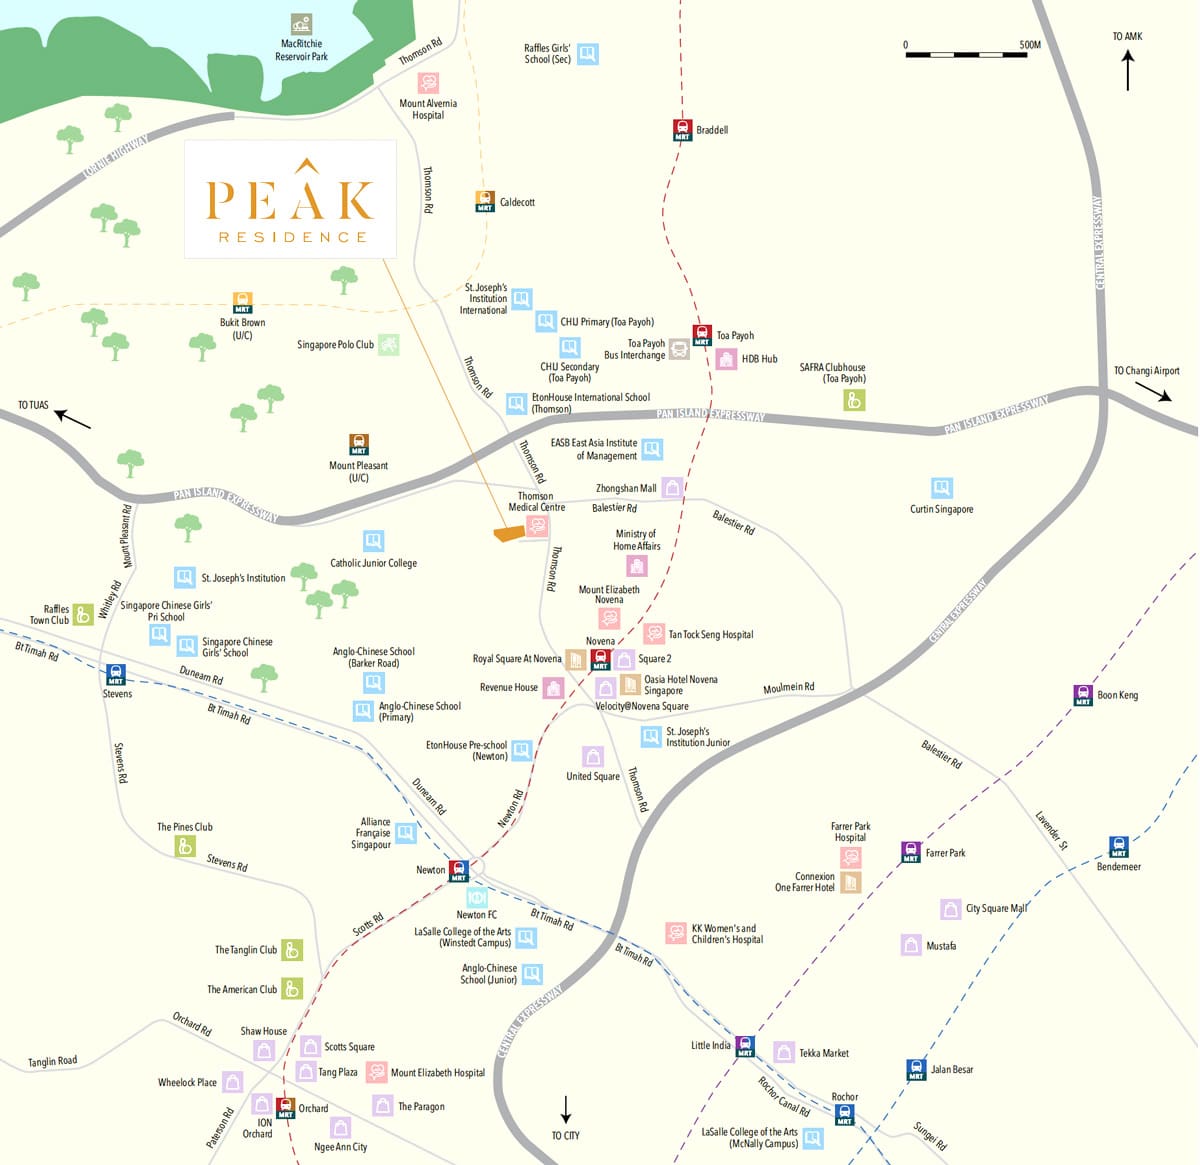 Peak Residence - Location Map